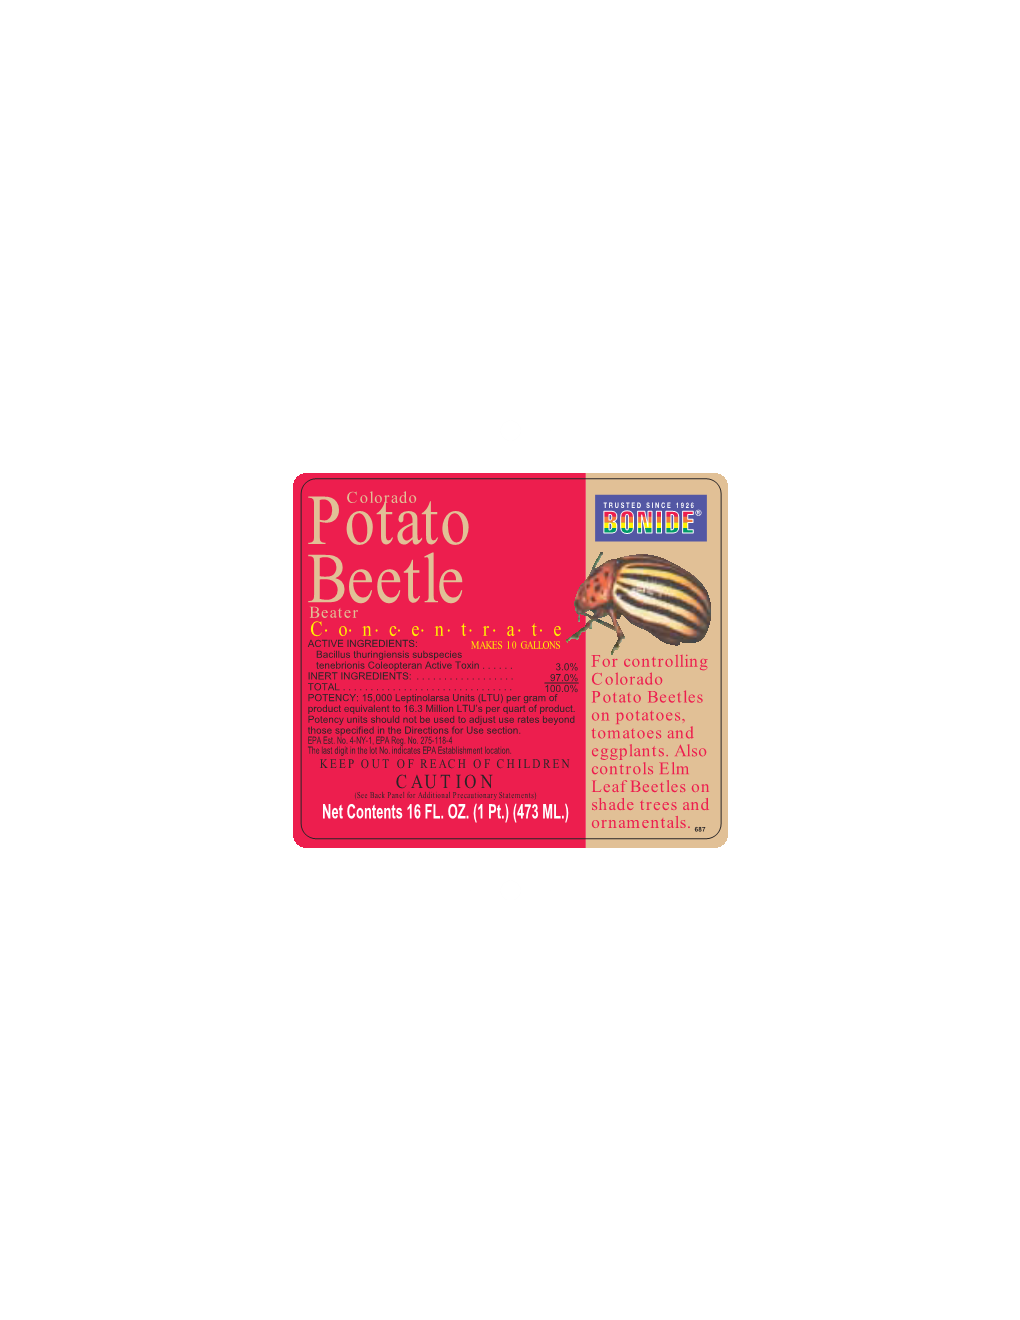 Potato Beetles Product Equivalent to 16.3 Million LTU’S Per Quart of Product